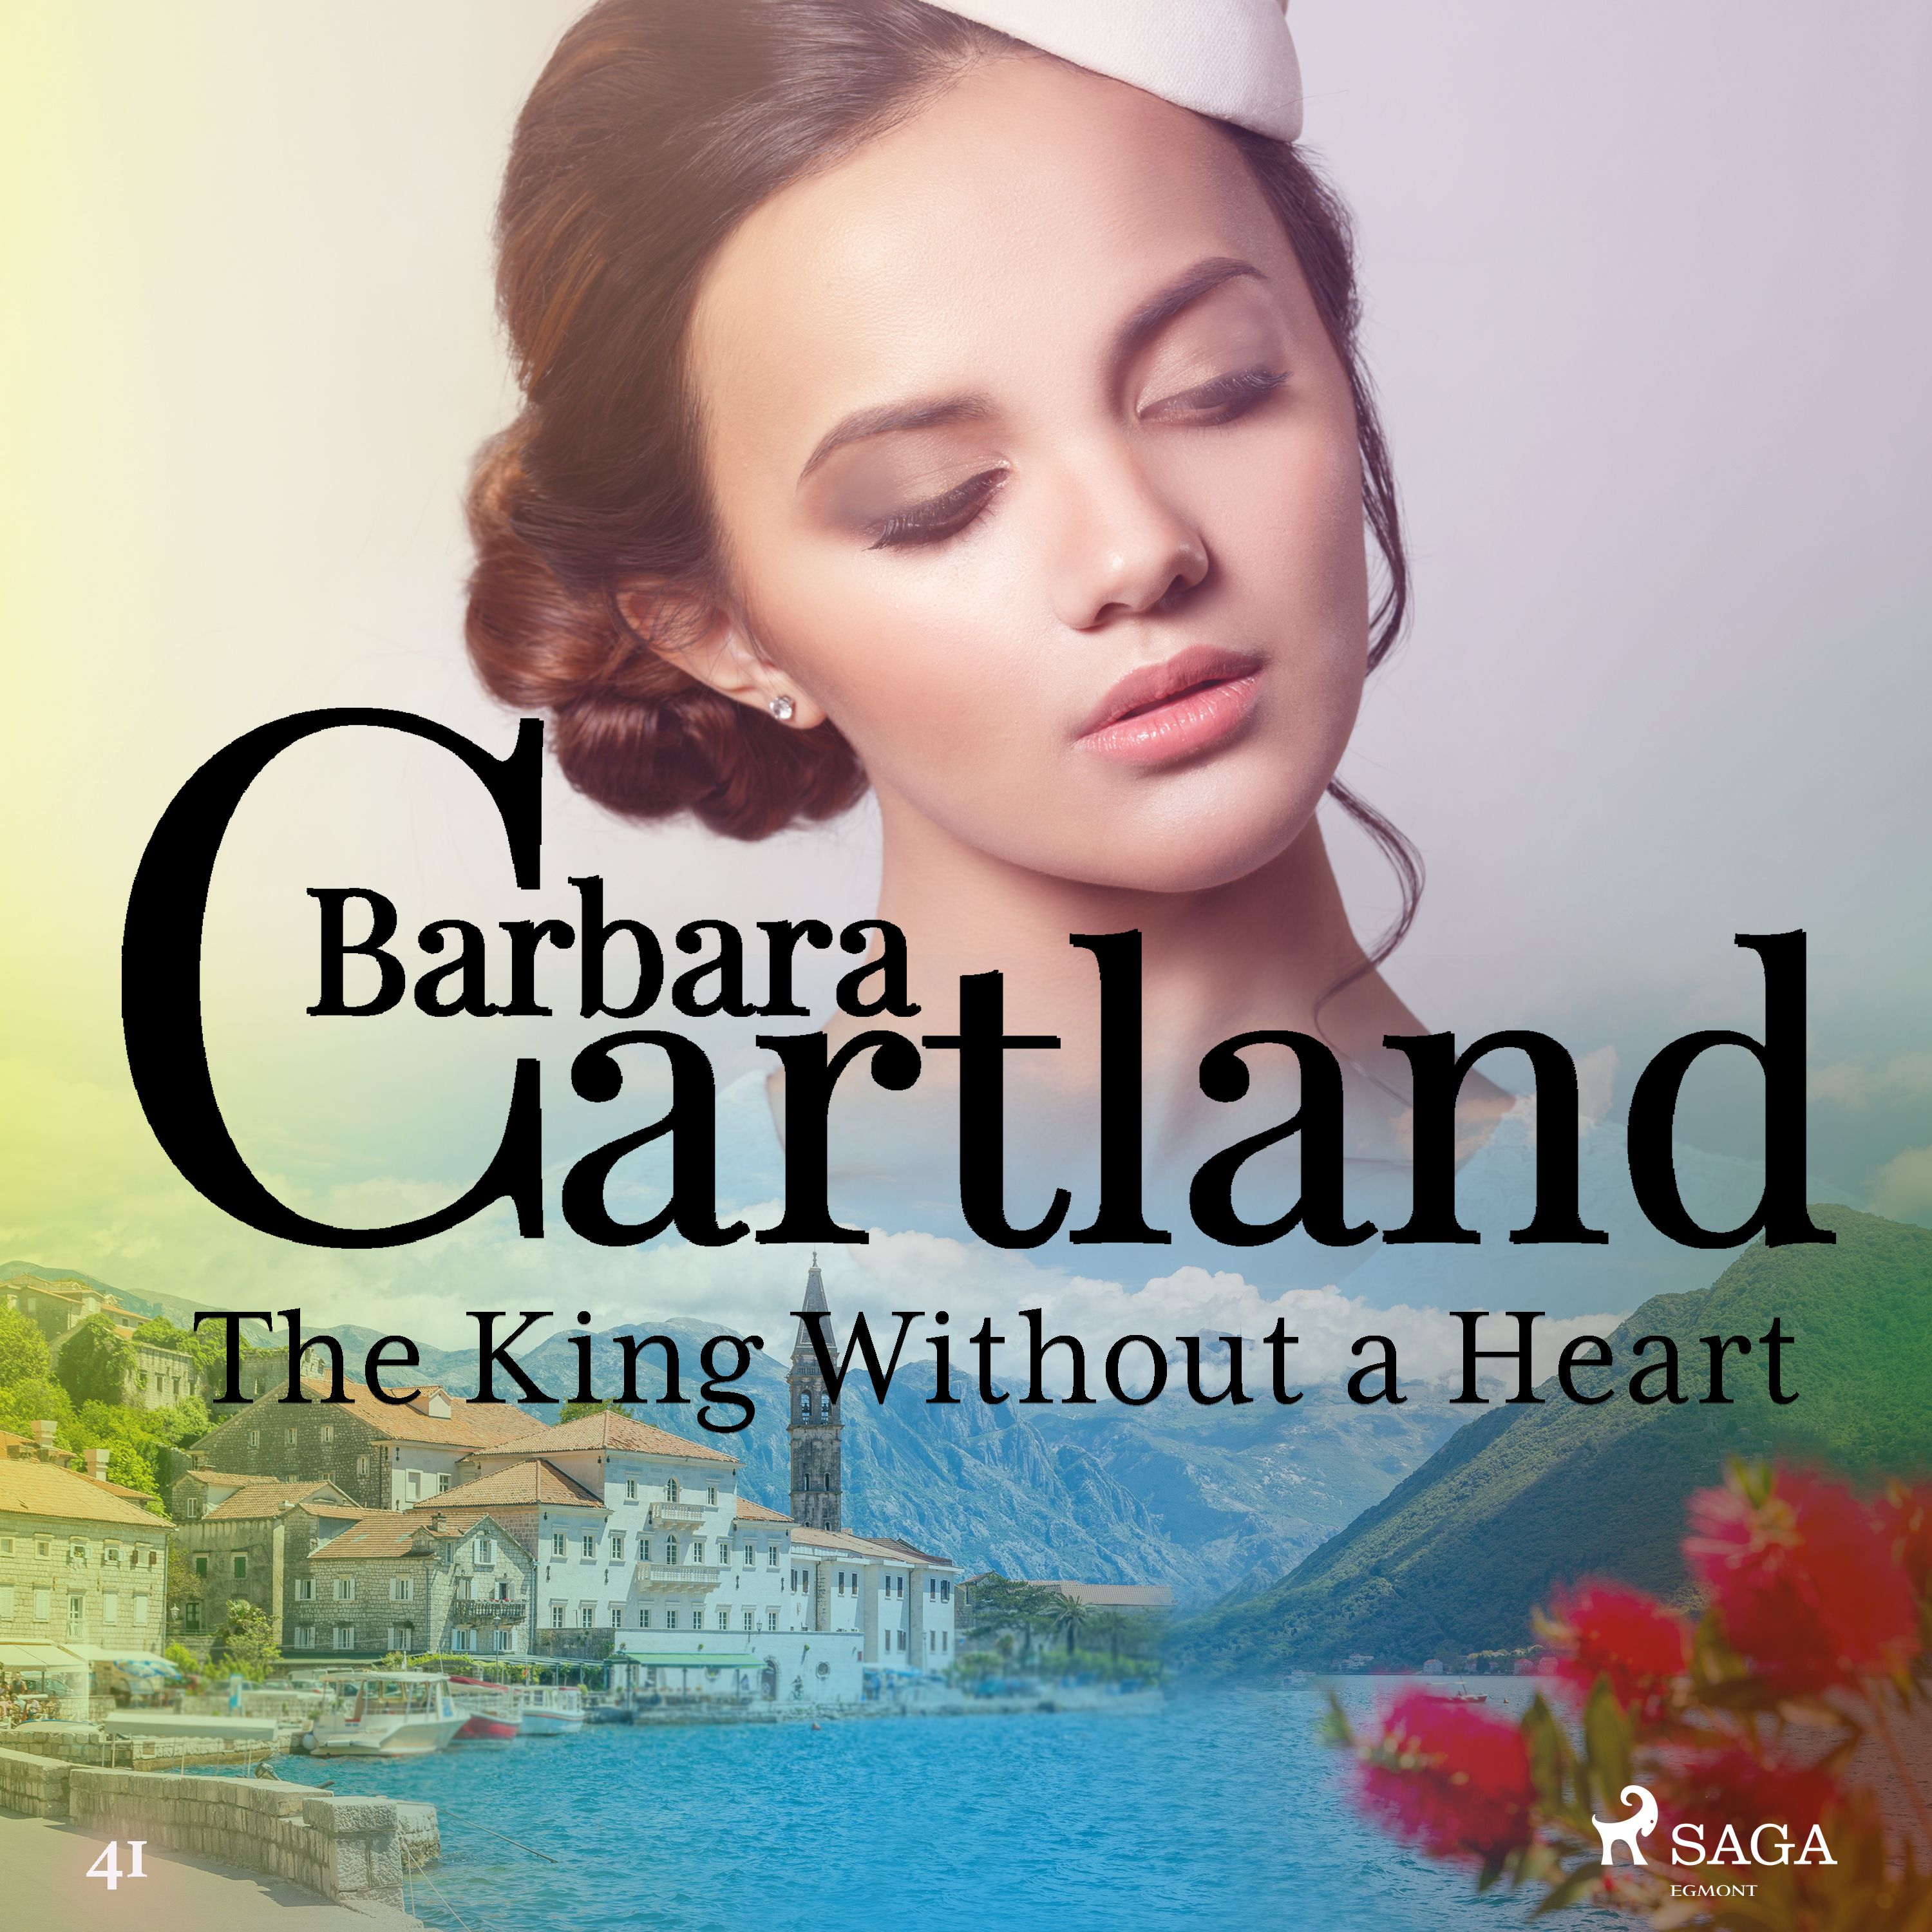 The King without a Heart, ljudbok av Barbara Cartland